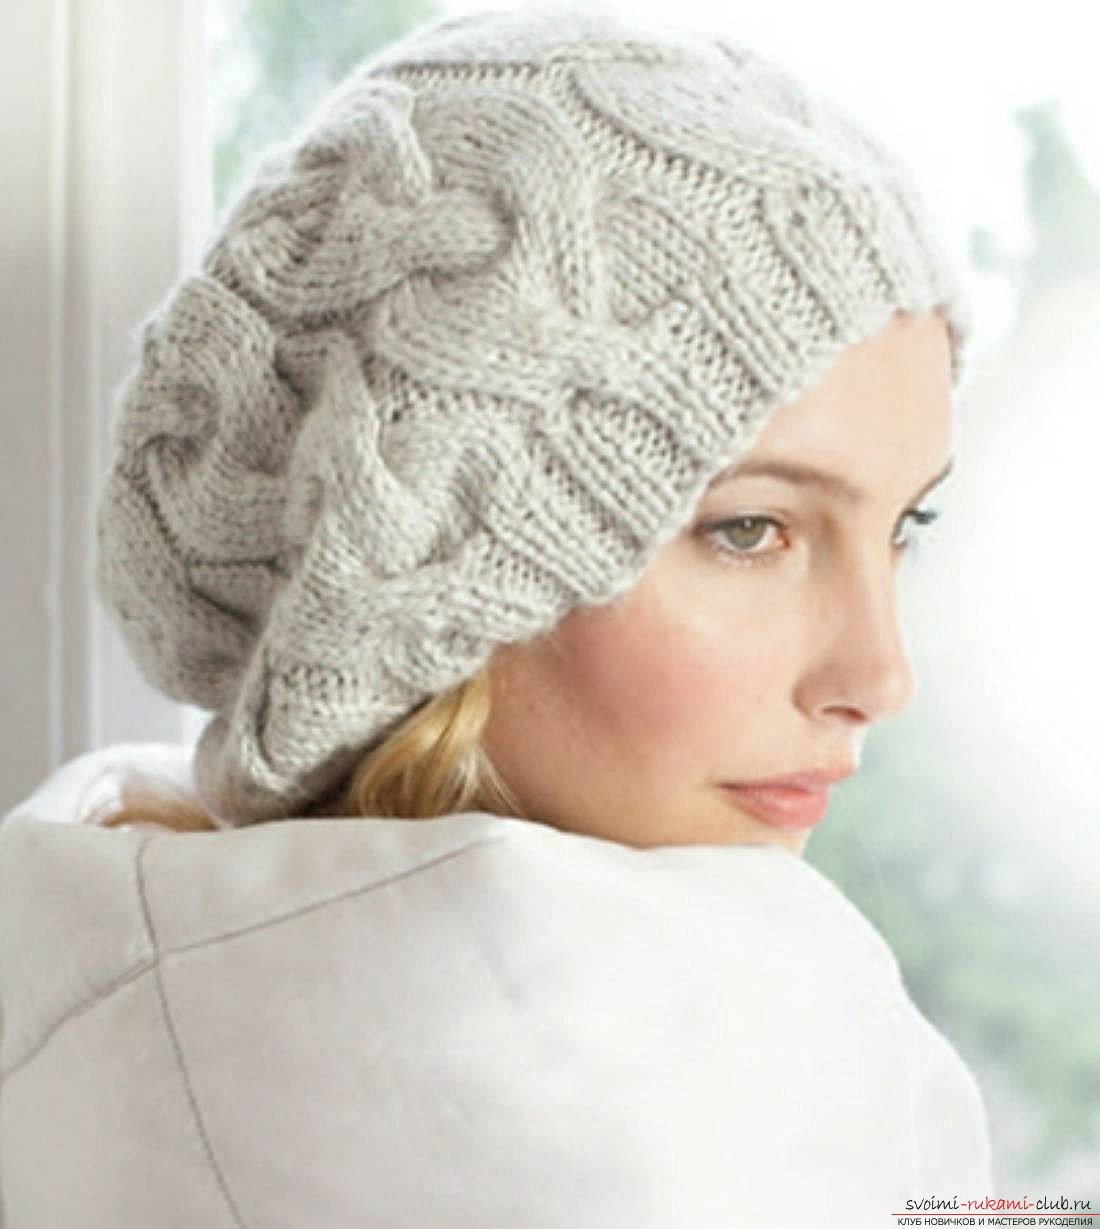 knitted needles universal female beret. Photo №6